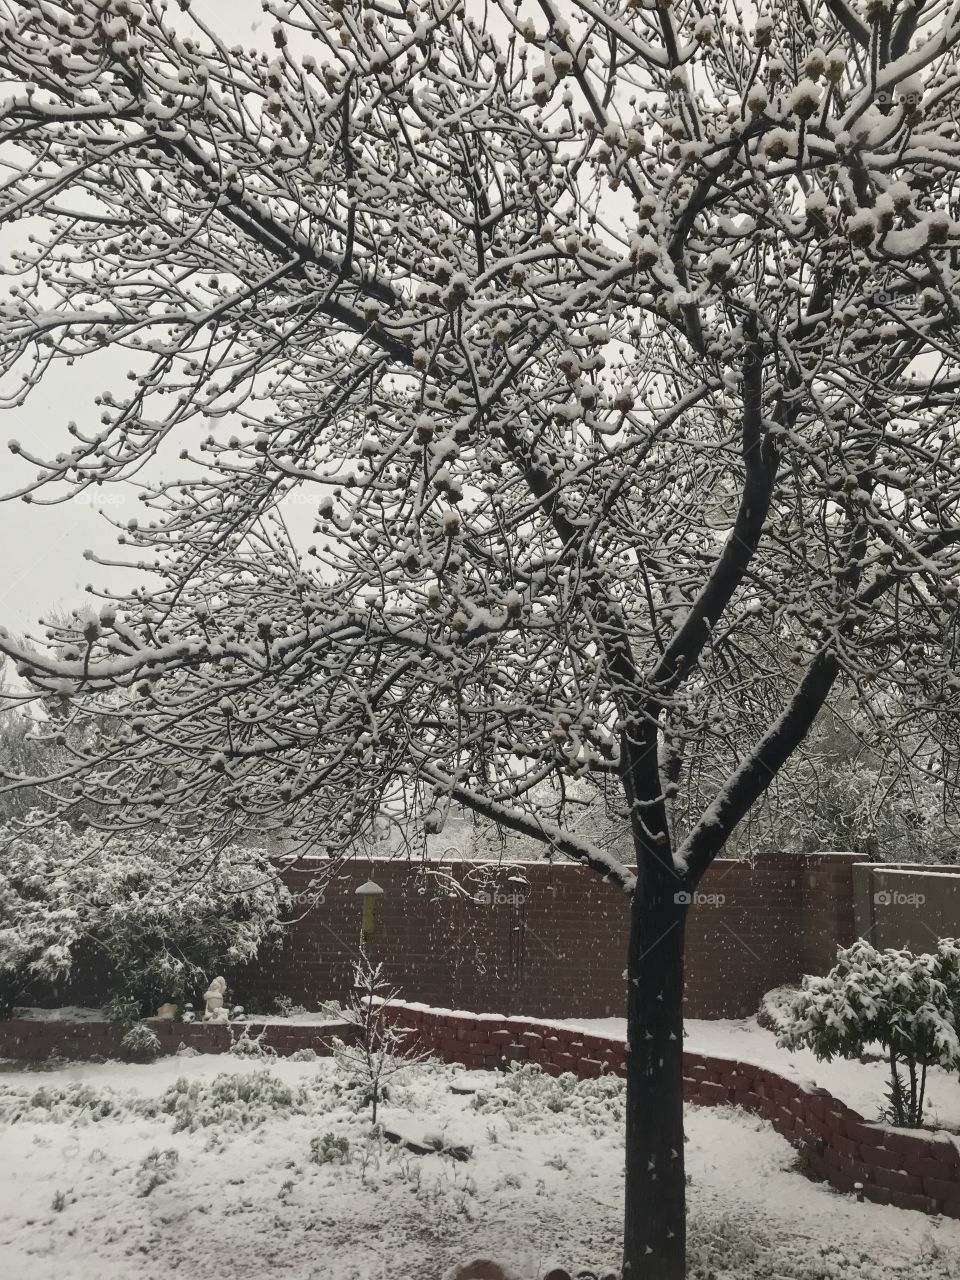 Tucson Arizona 2019 snow day